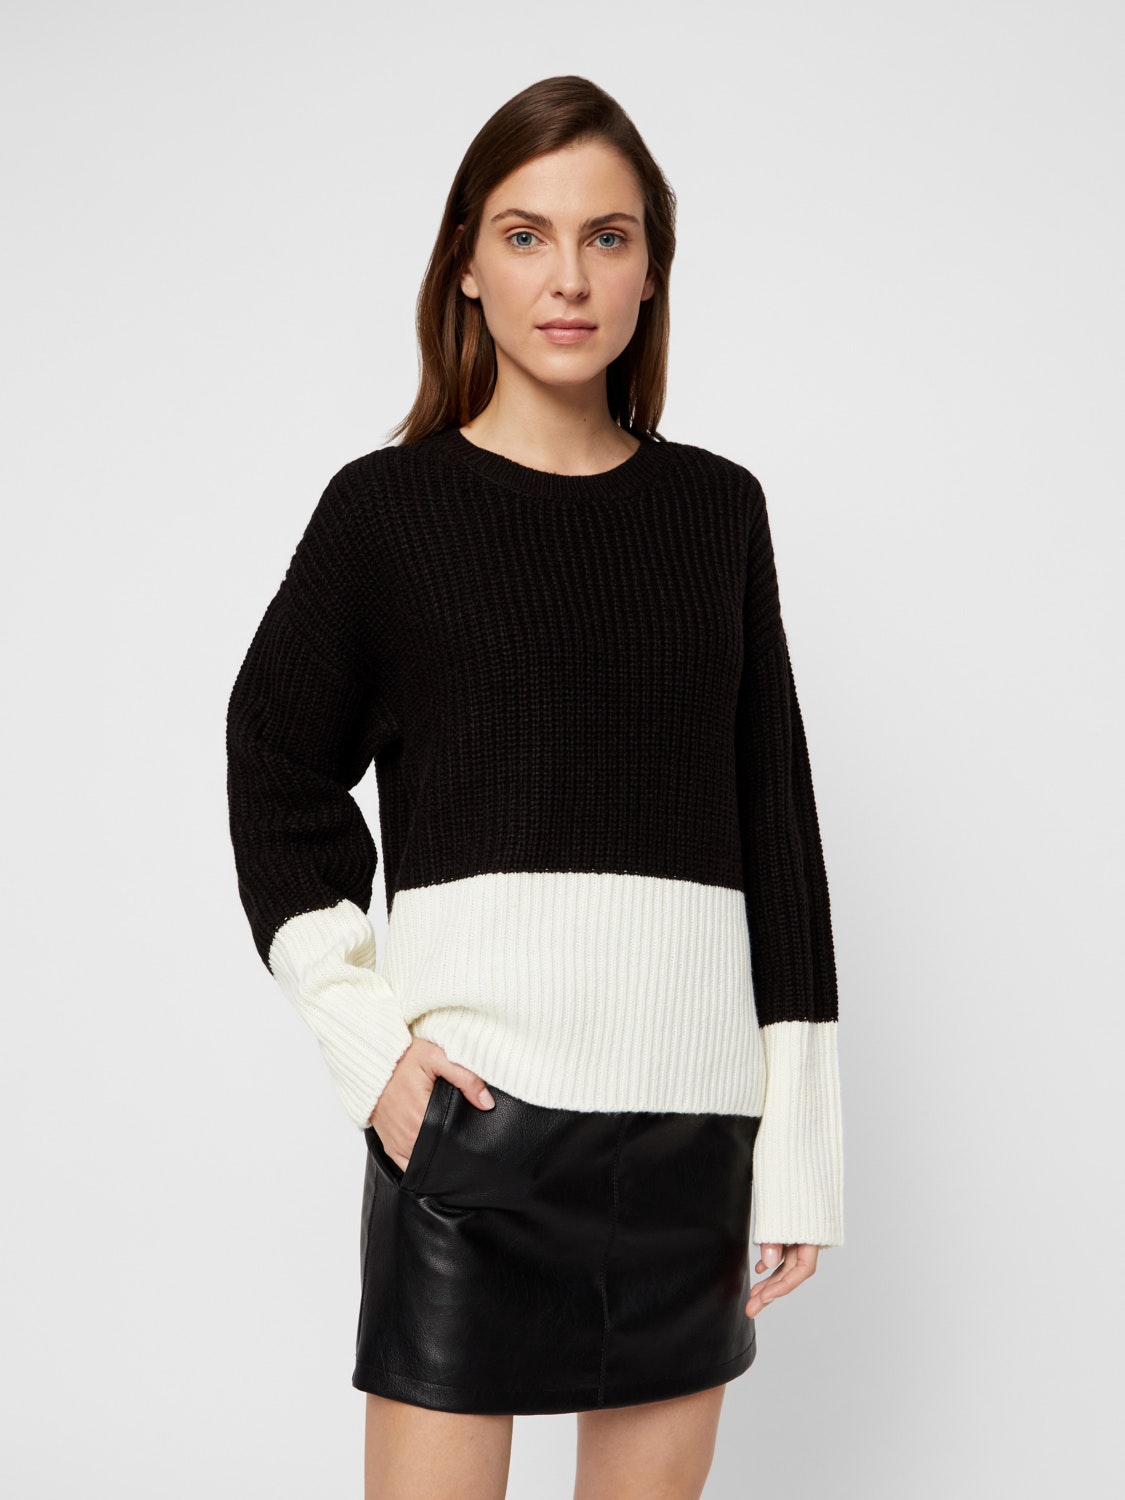 FINAL SALE - Glendora colour block knit sweater